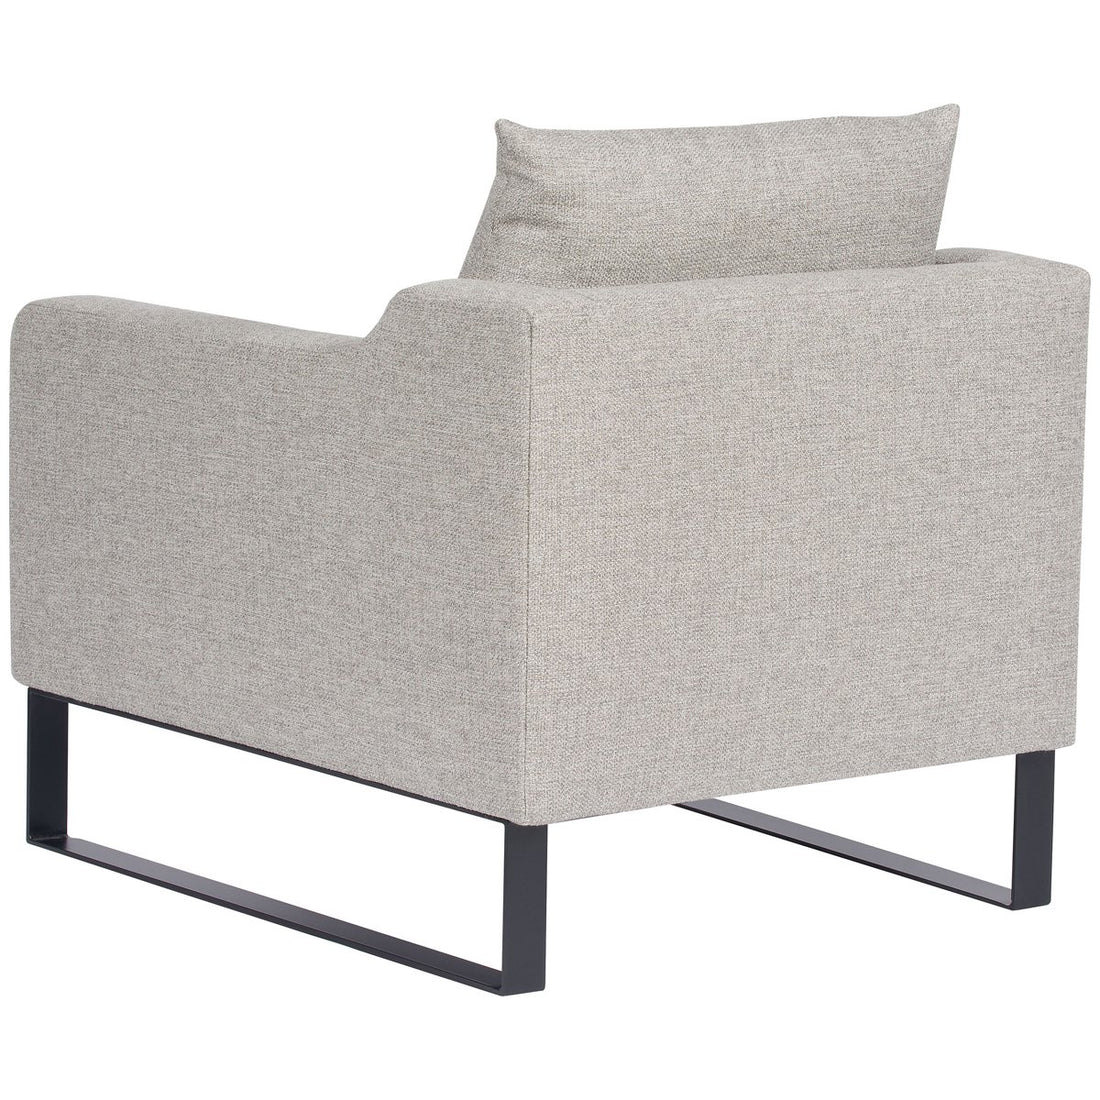 Vanguard Furniture Thea Chair